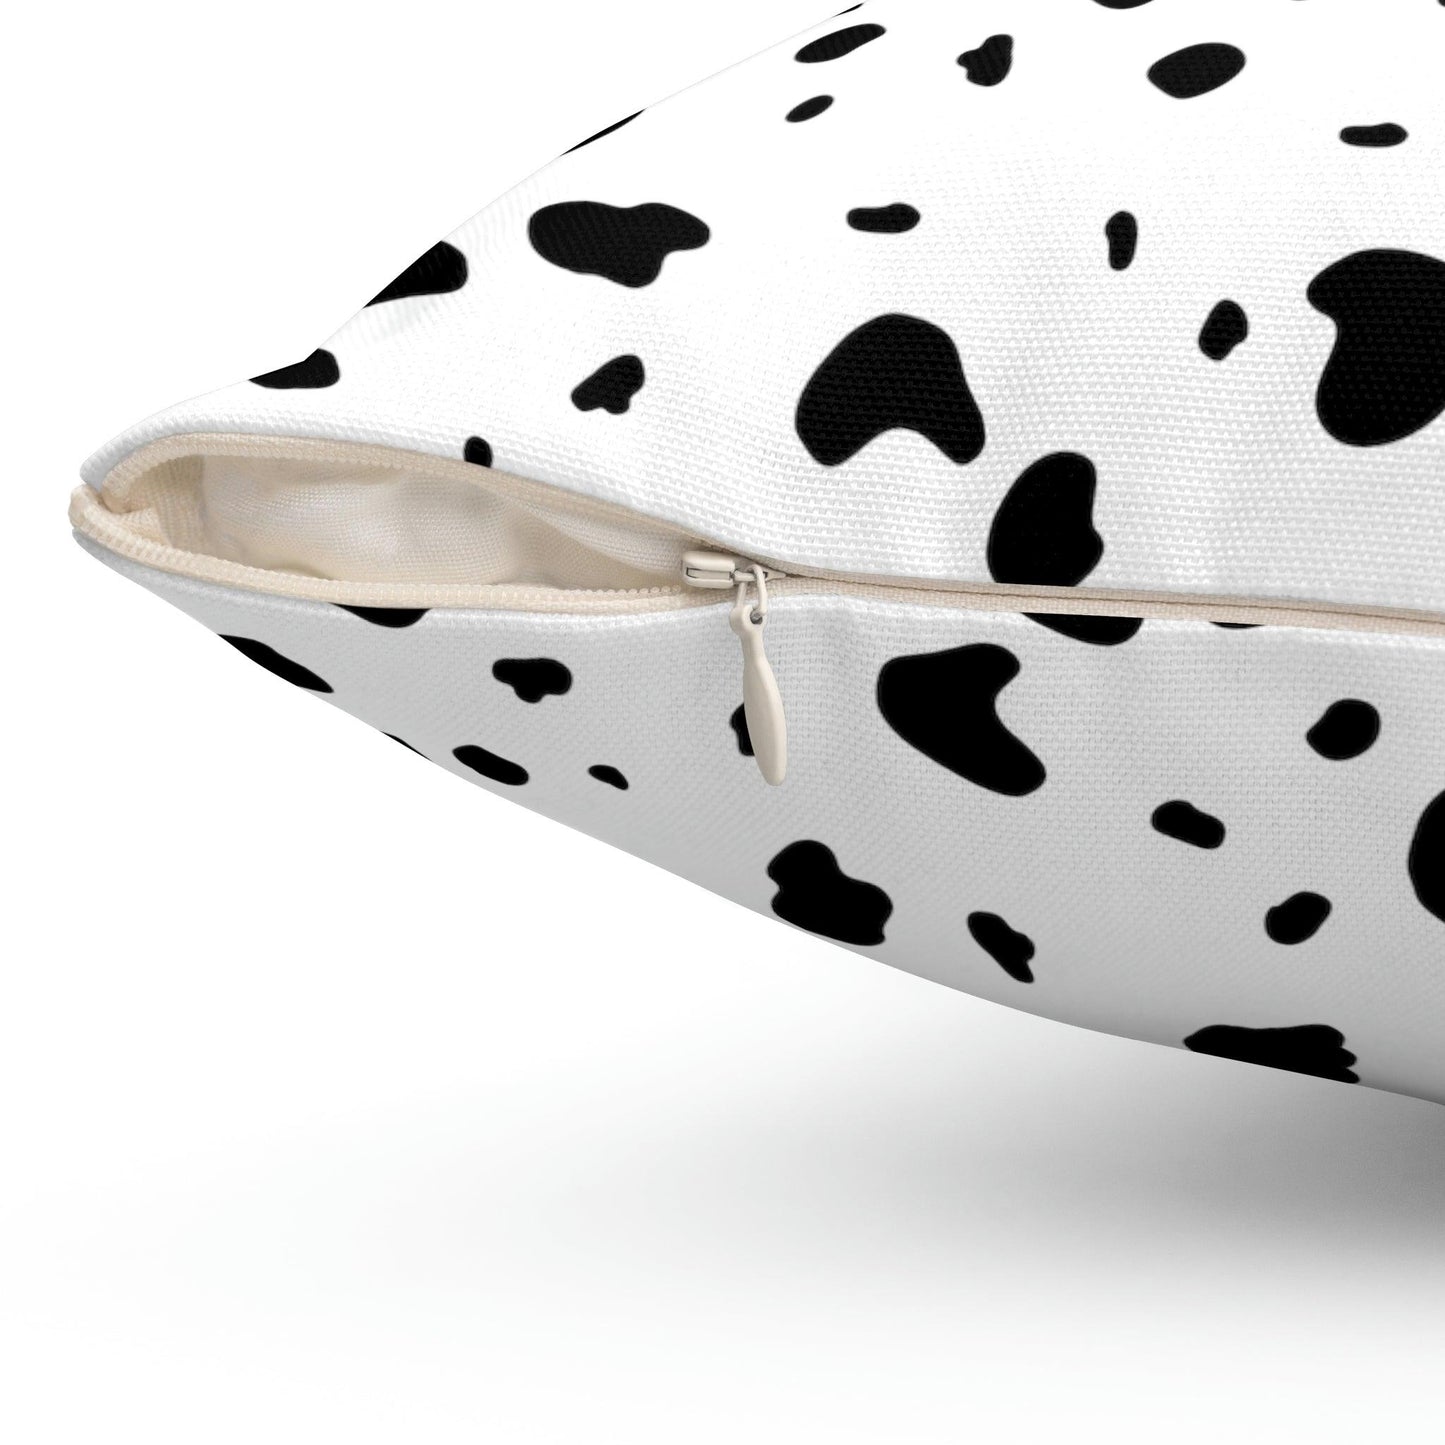 Dalmatian Print Pillow - BentleyBlueCo